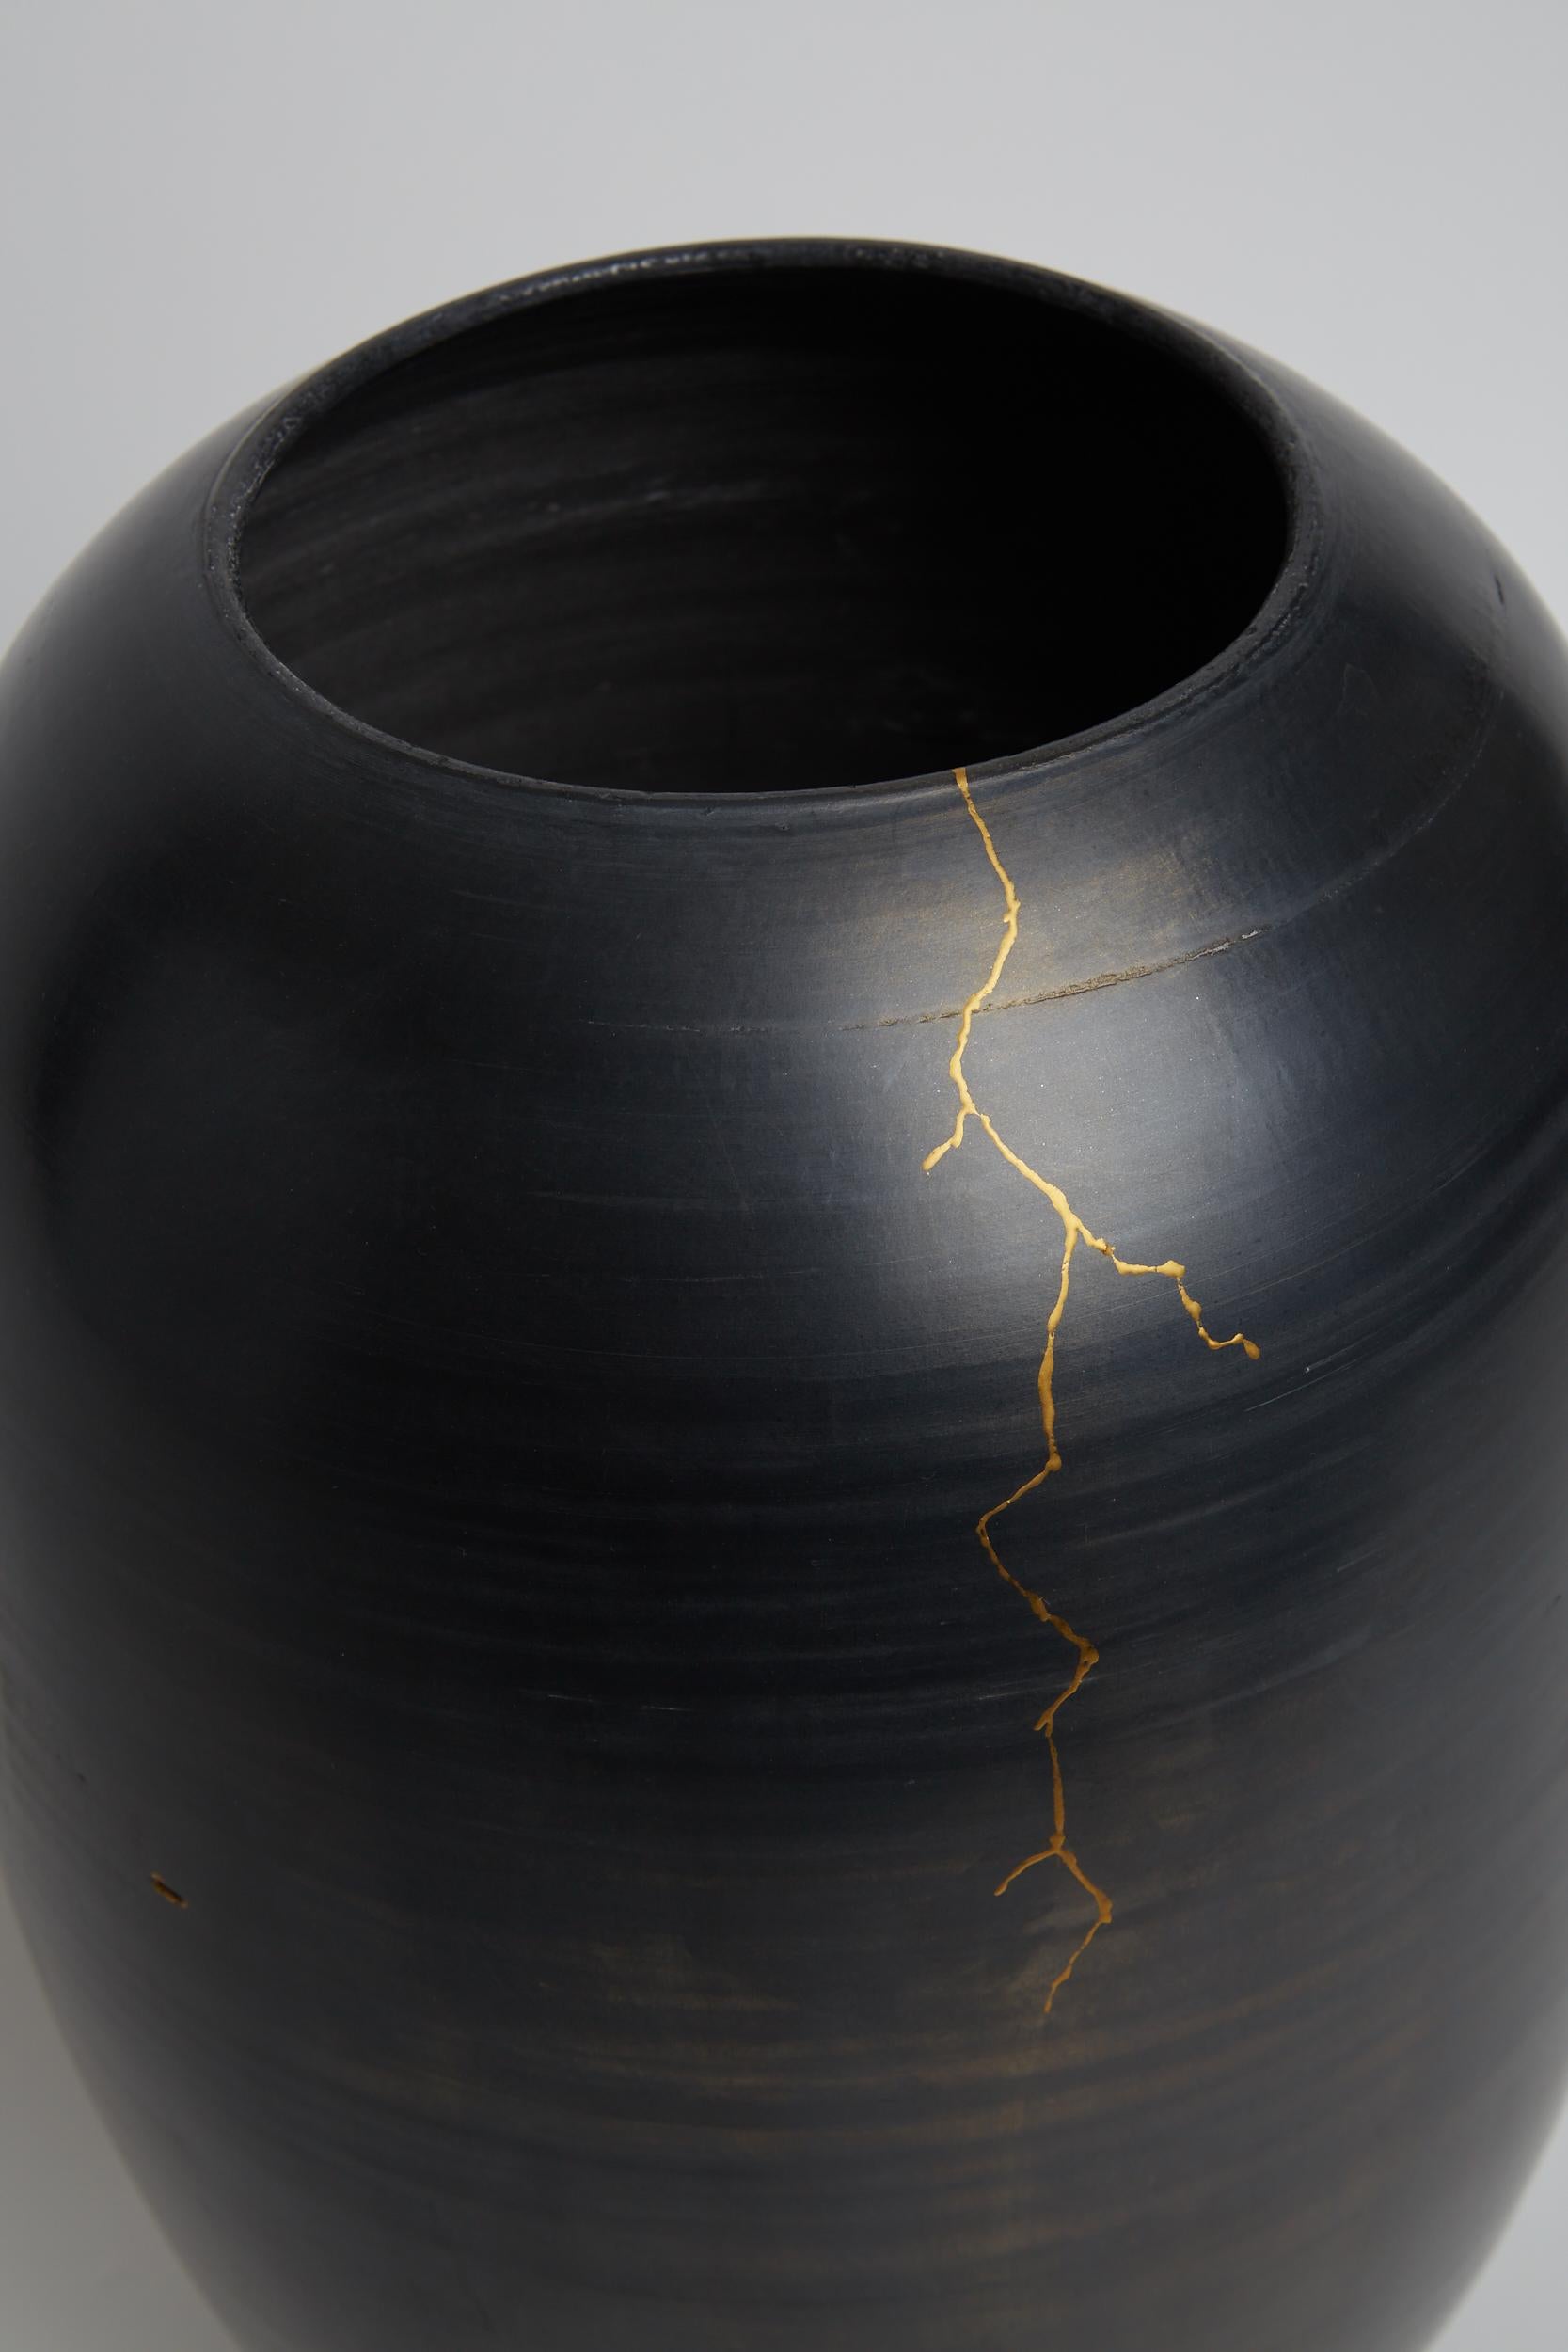 Contemporary Unique Kintsugi Vase by Karen Swami